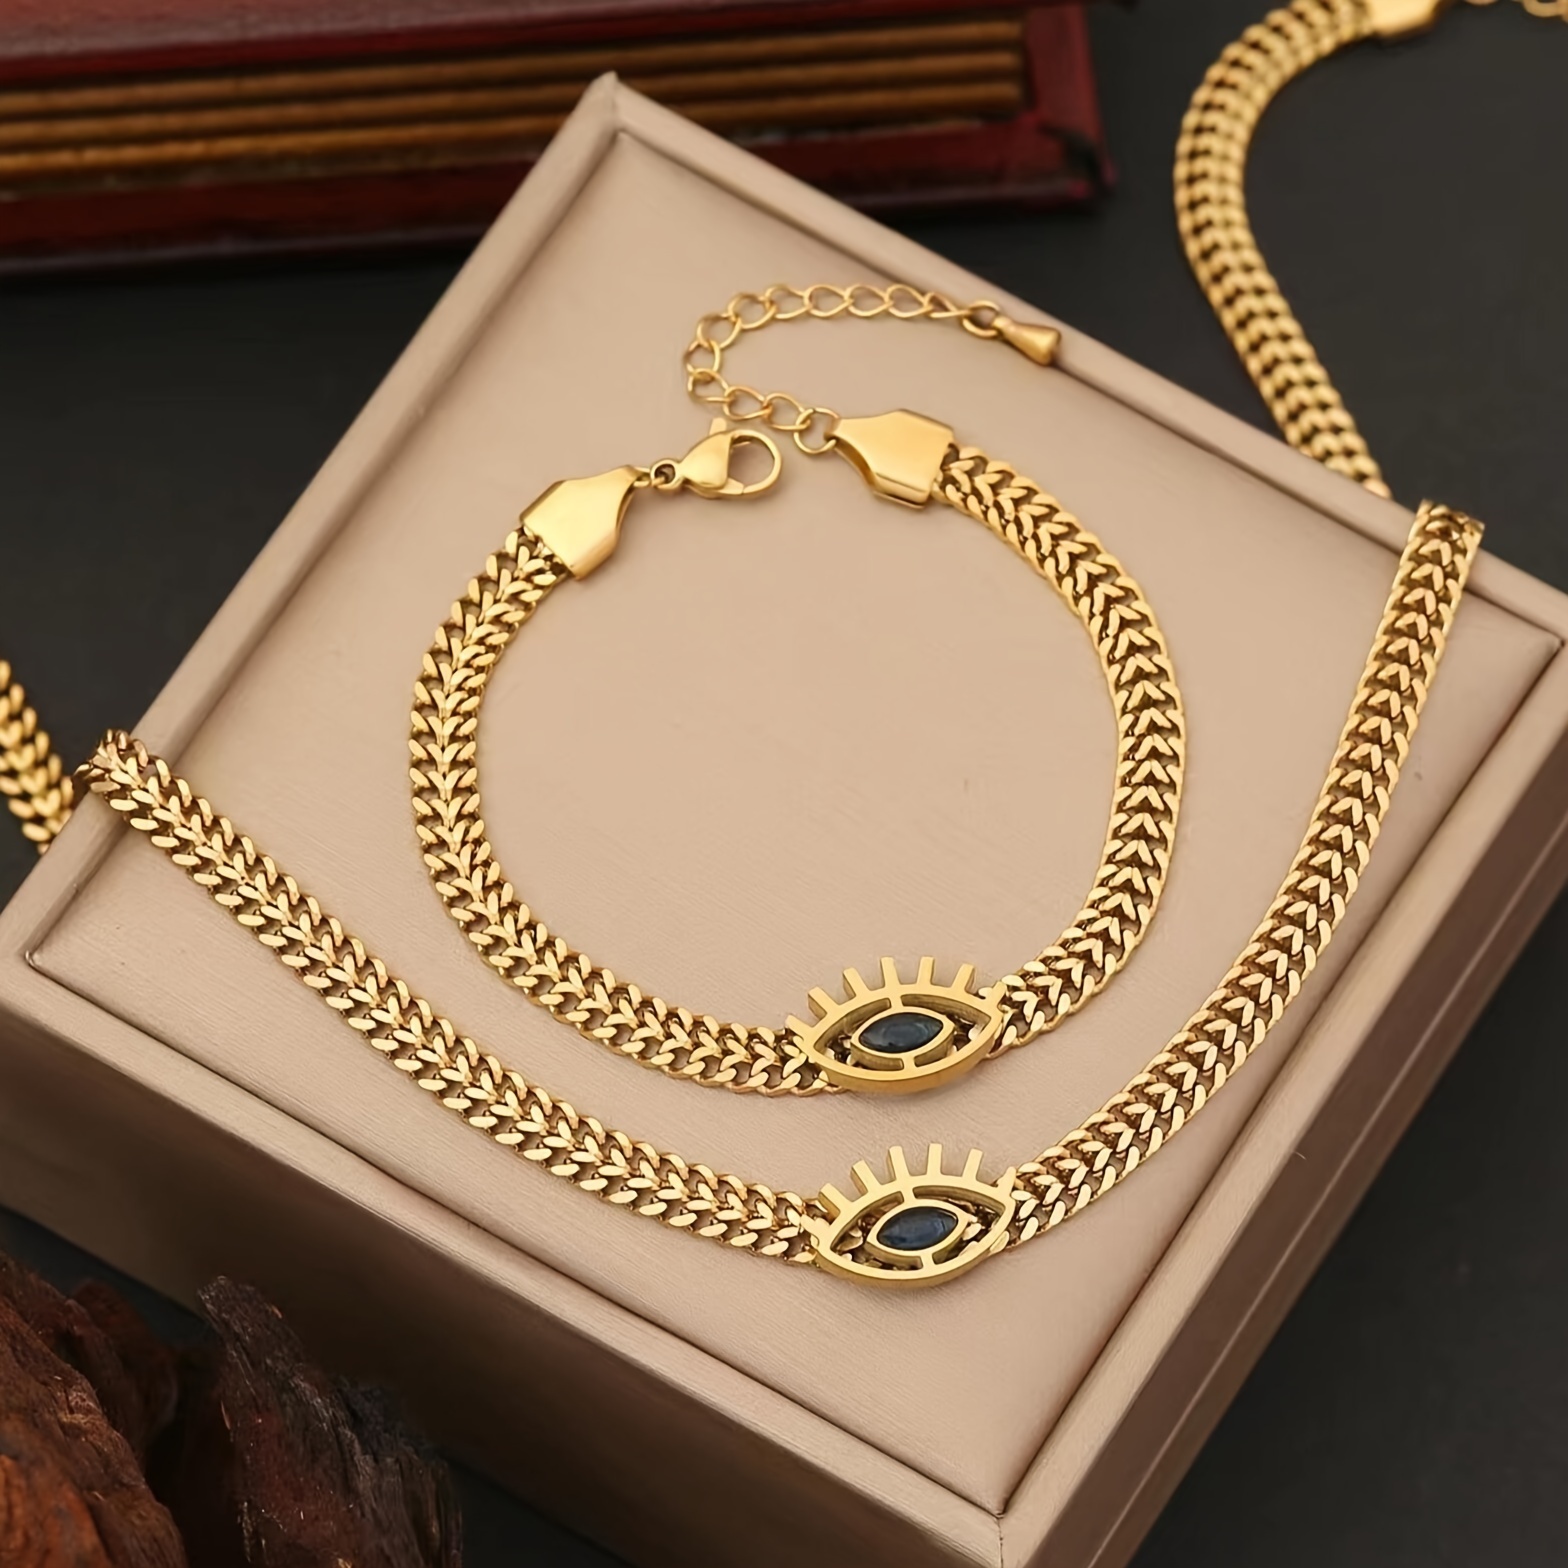 

2pcs/set, Golden Stainless Eye Shape Design, Inlaid Sparking Zircon Pendant Necklace & Bracelet Set, Fashion Unique Accessory For Daily Wear & Party, Idea Gift For Ladies